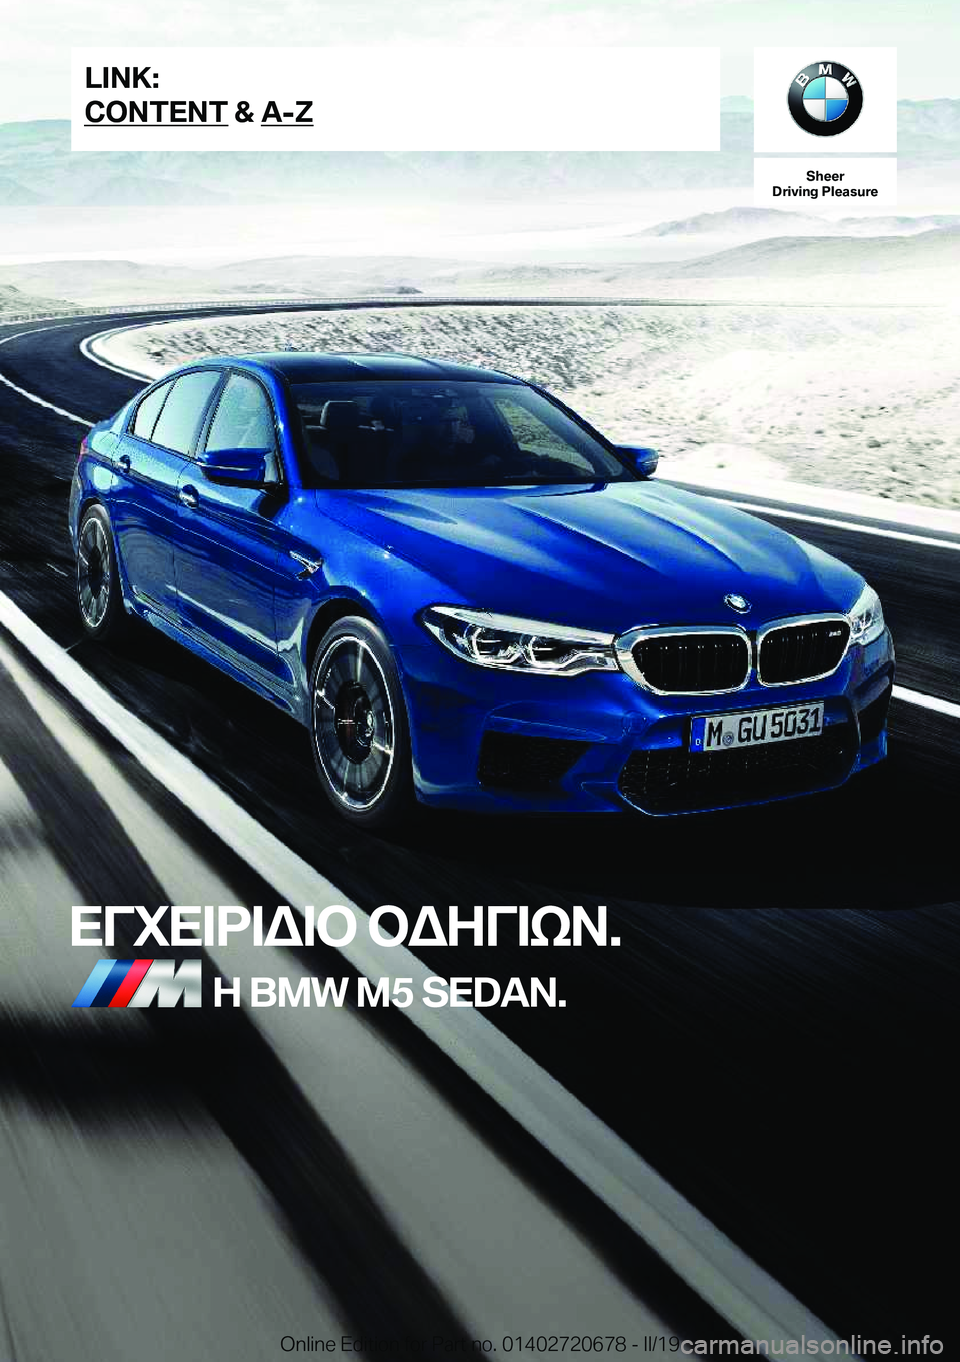 BMW M5 2019  ΟΔΗΓΌΣ ΧΡΉΣΗΣ (in Greek) �S�h�e�e�r
�D�r�i�v�i�n�g��P�l�e�a�s�u�r�e
XViX=d=W=b�bWZV=kA�.Z��B�M�W��M�5��S�E�D�A�N�.�L�I�N�K�:
�C�O�N�T�E�N�T��&��A�-�Z�O�n�l�i�n�e��E�d�i�t�i�o�n��f�o�r��P�a�r�t��n�